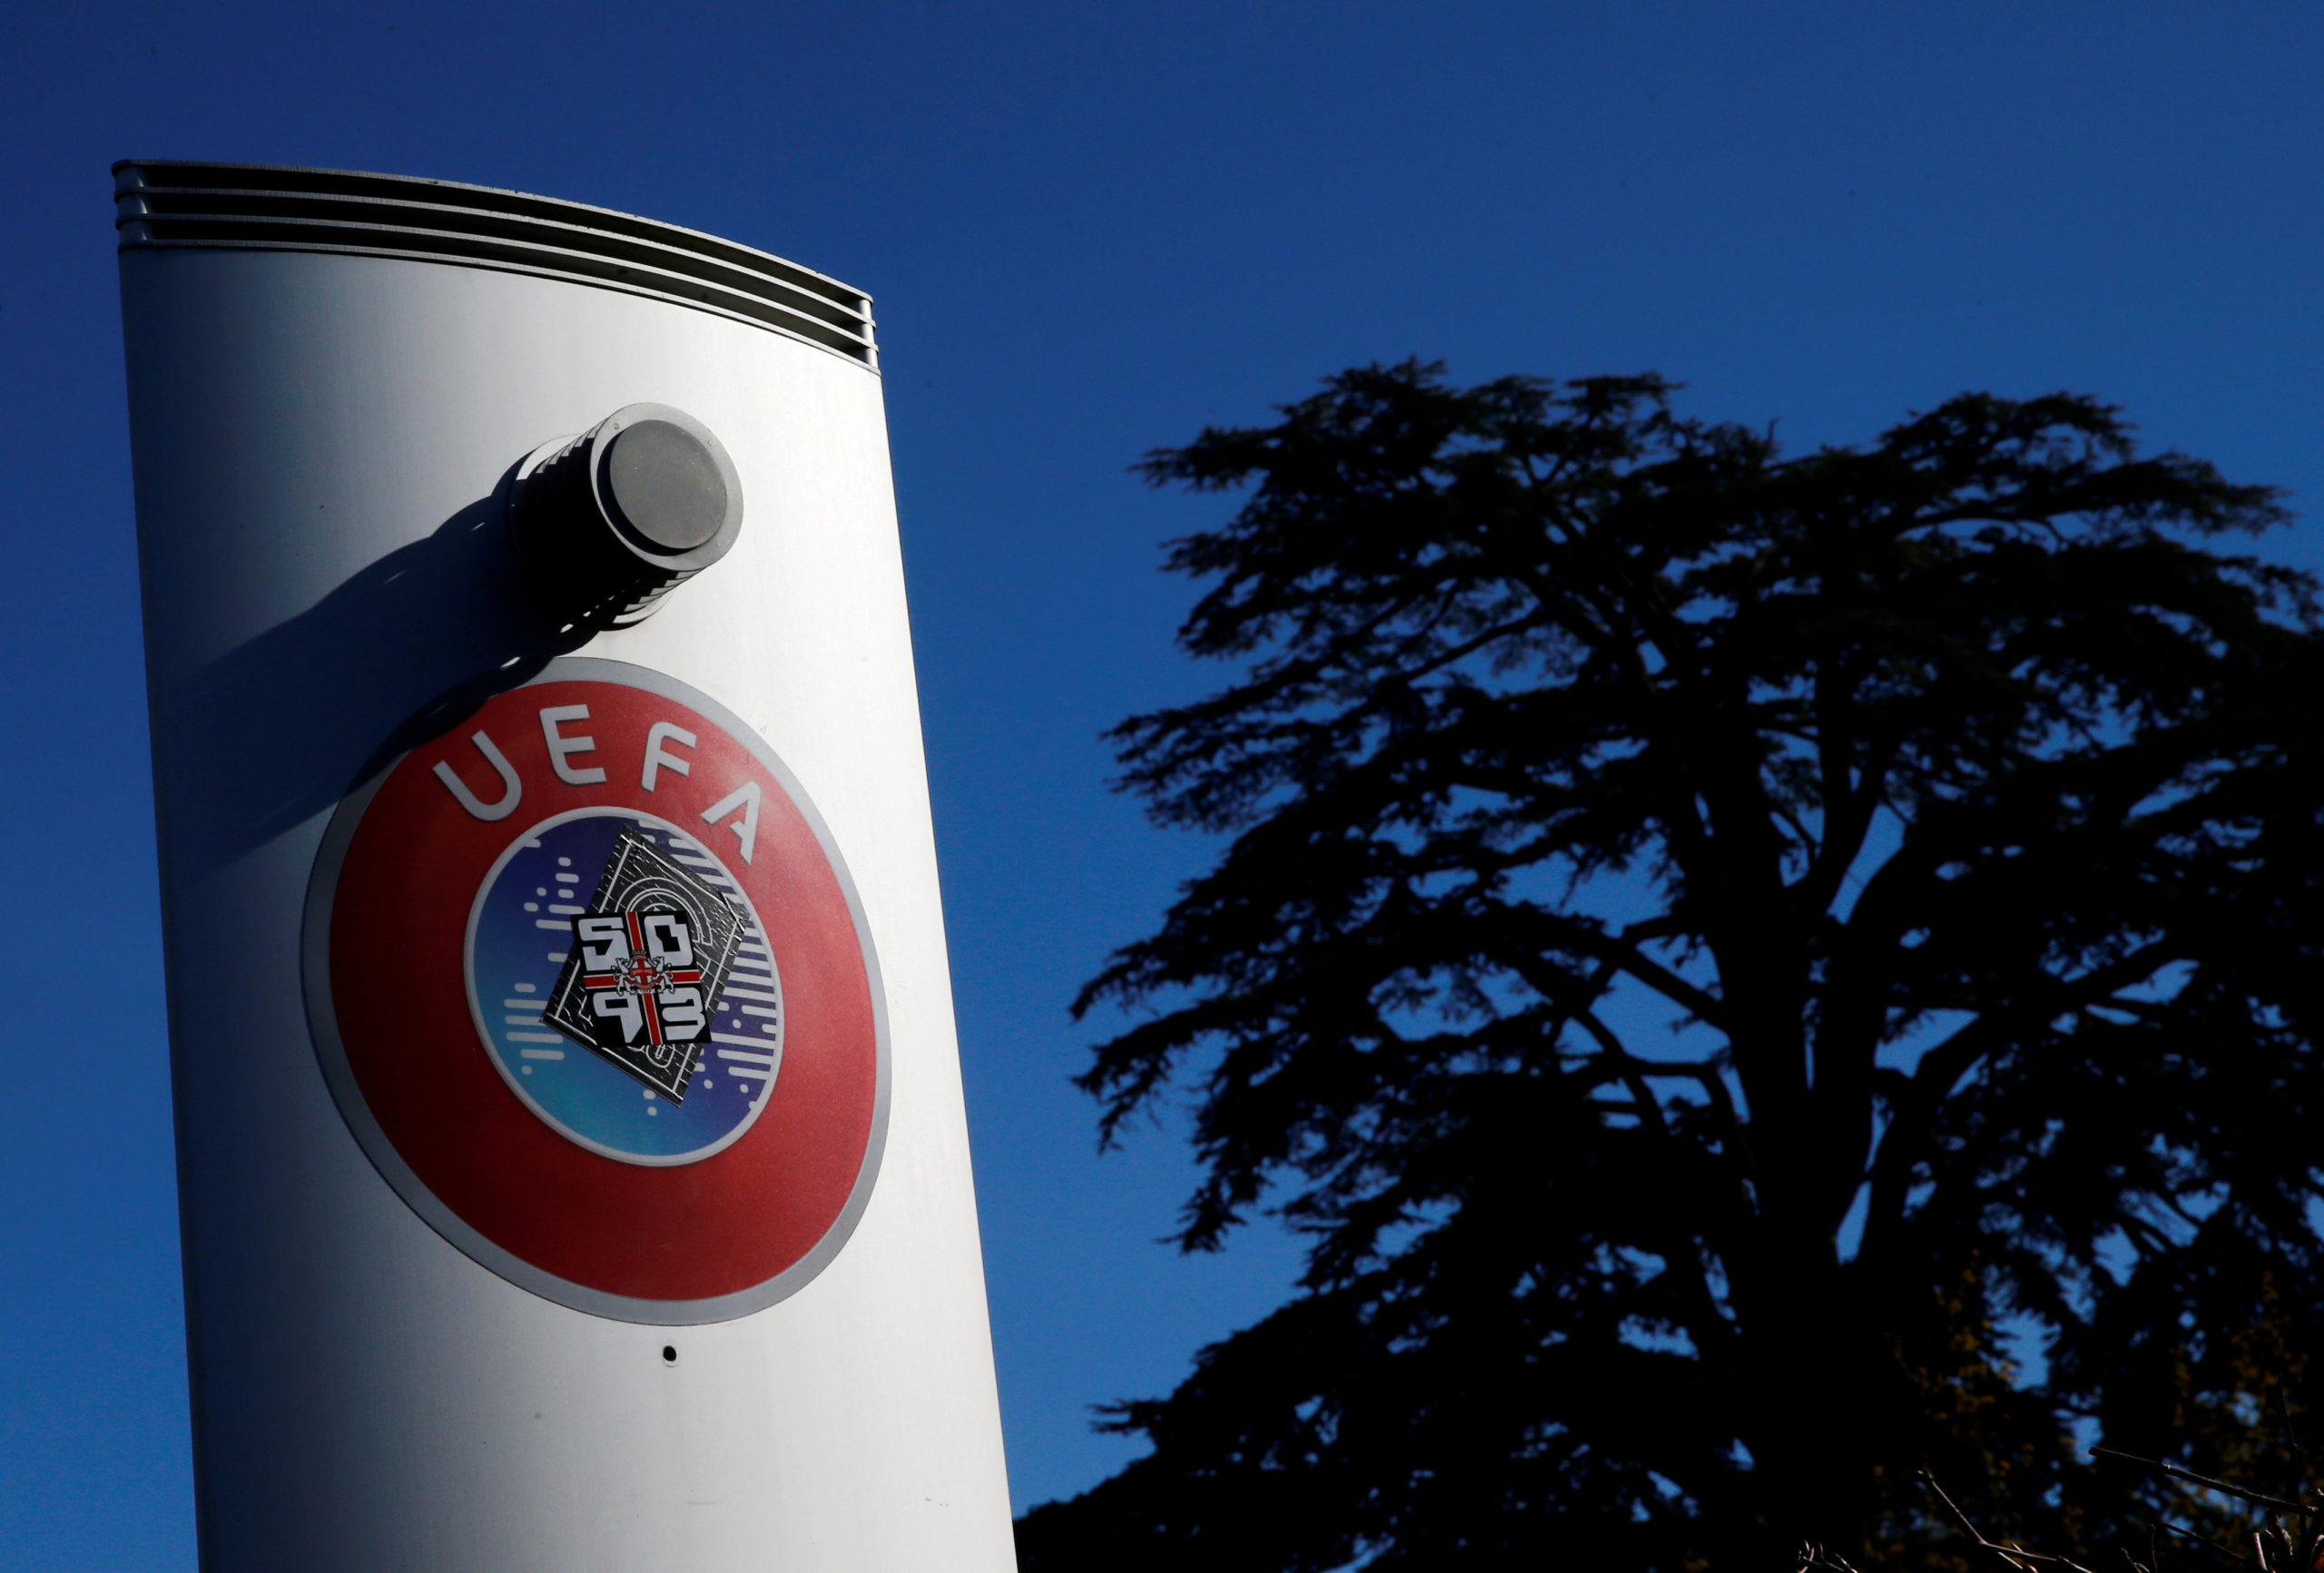 Altice vend des droits UEFA à Mediapro mais diffusera Telefoot